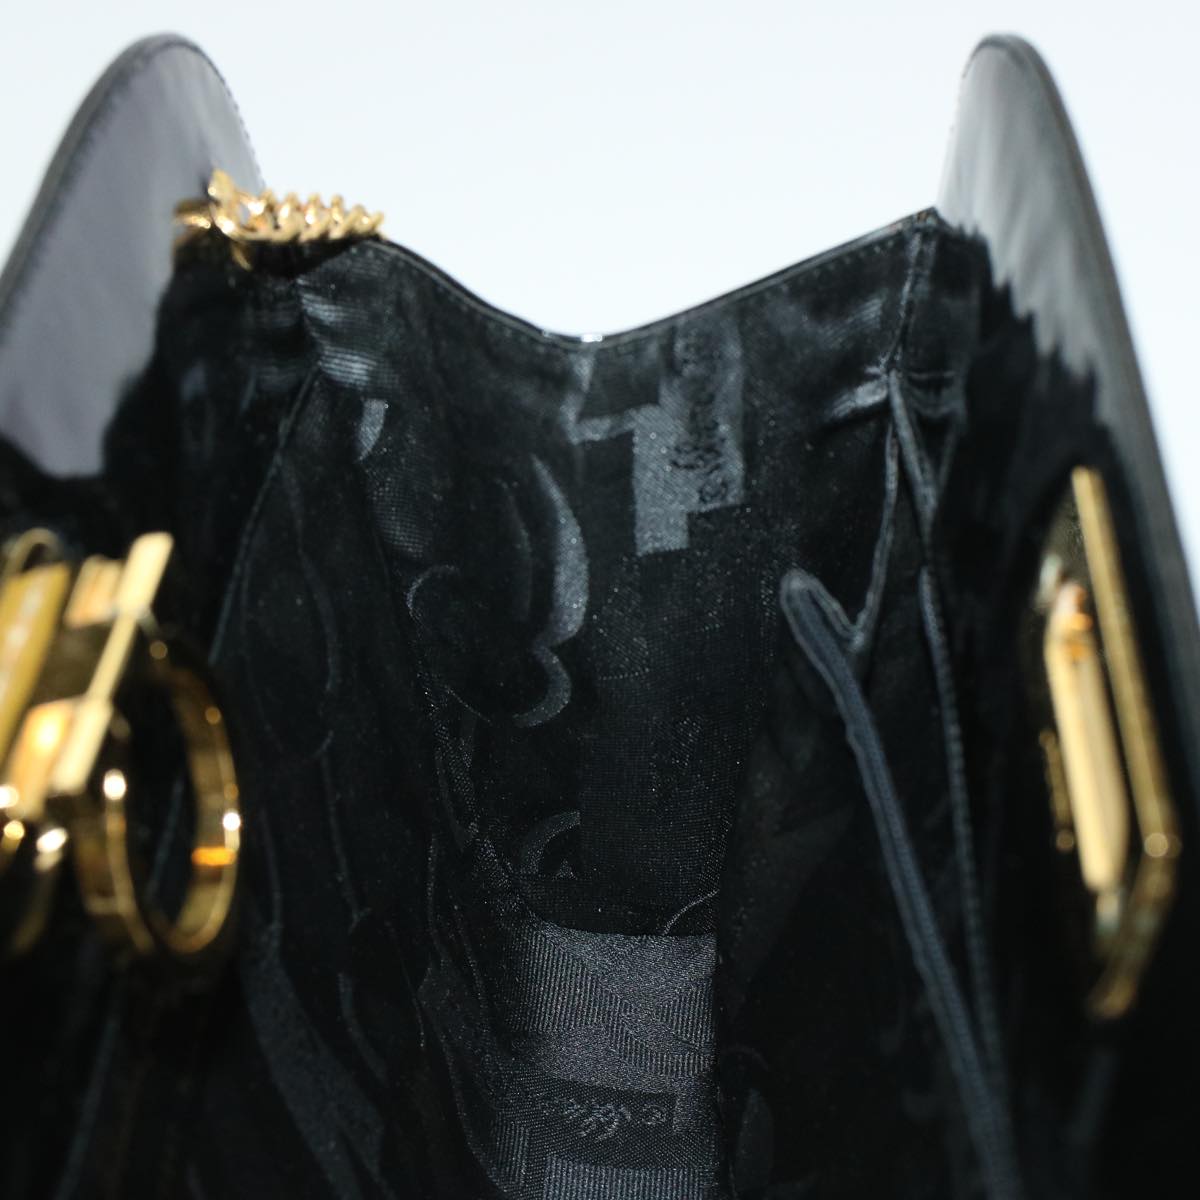 Salvatore Ferragamo Gancini Chain Shoulder Bag Patent leather Black Auth 43098